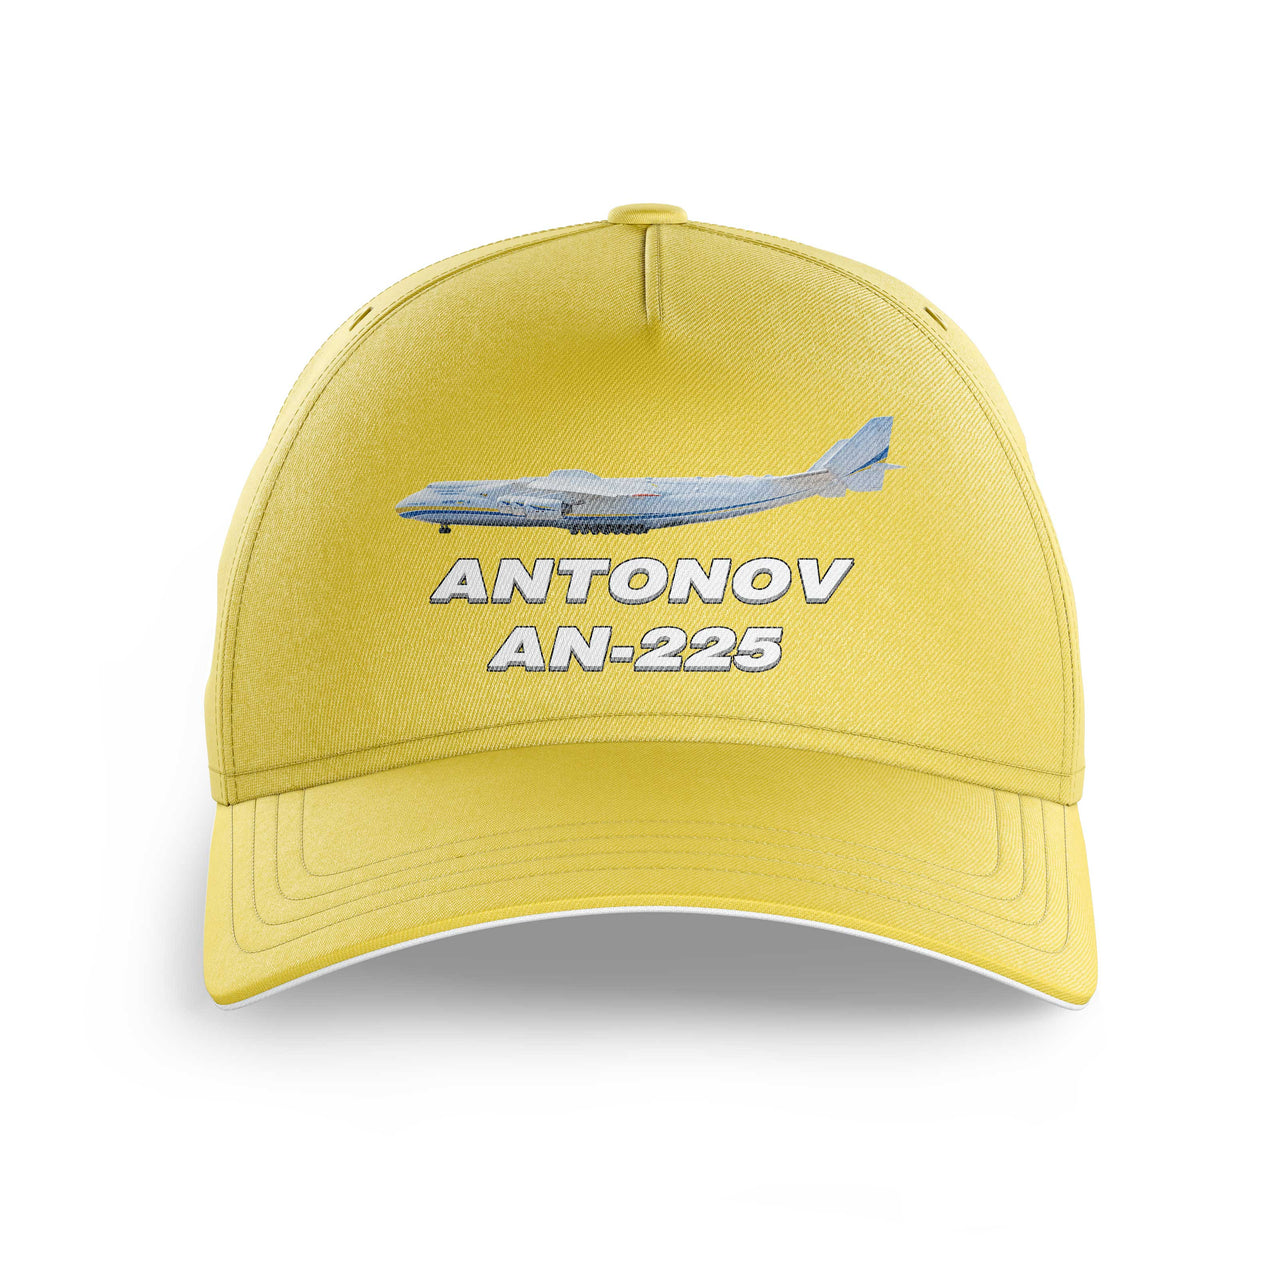 The Antonov AN-225 Printed Hats